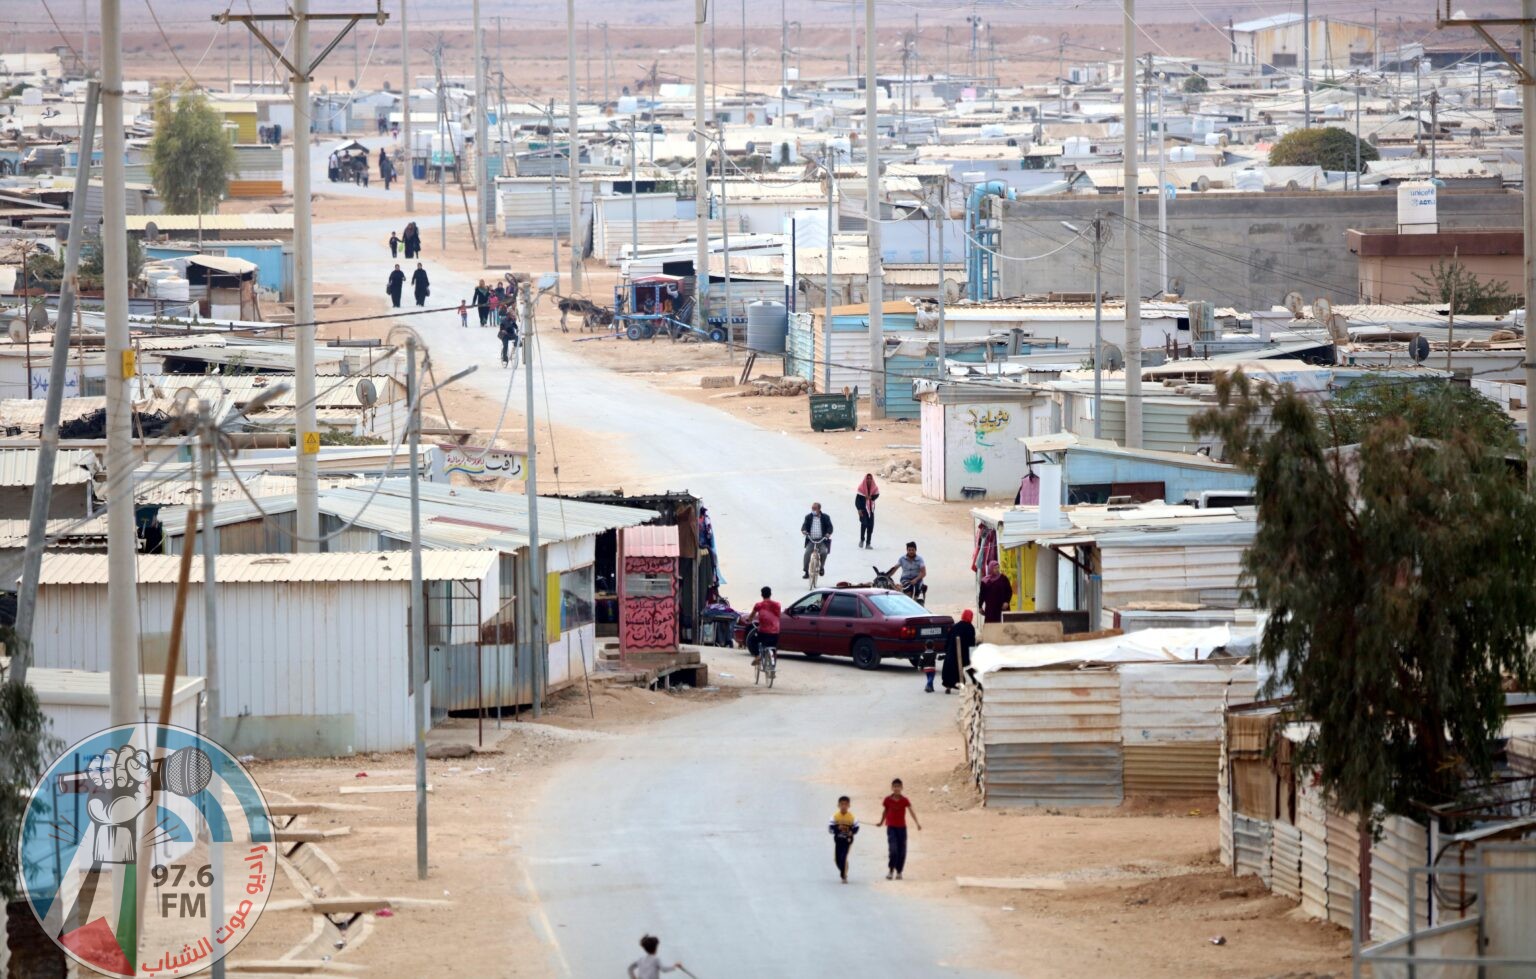 (211119) -- ZAATARI (JORDAN), Nov. 19, 2021 (Xinhua) -- Syrian refugees are seen at a refugee camp in Zaatari, Jordan, on Nov. 19, 2021. (Photo by Mohammad Abu Ghosh/Xinhua)